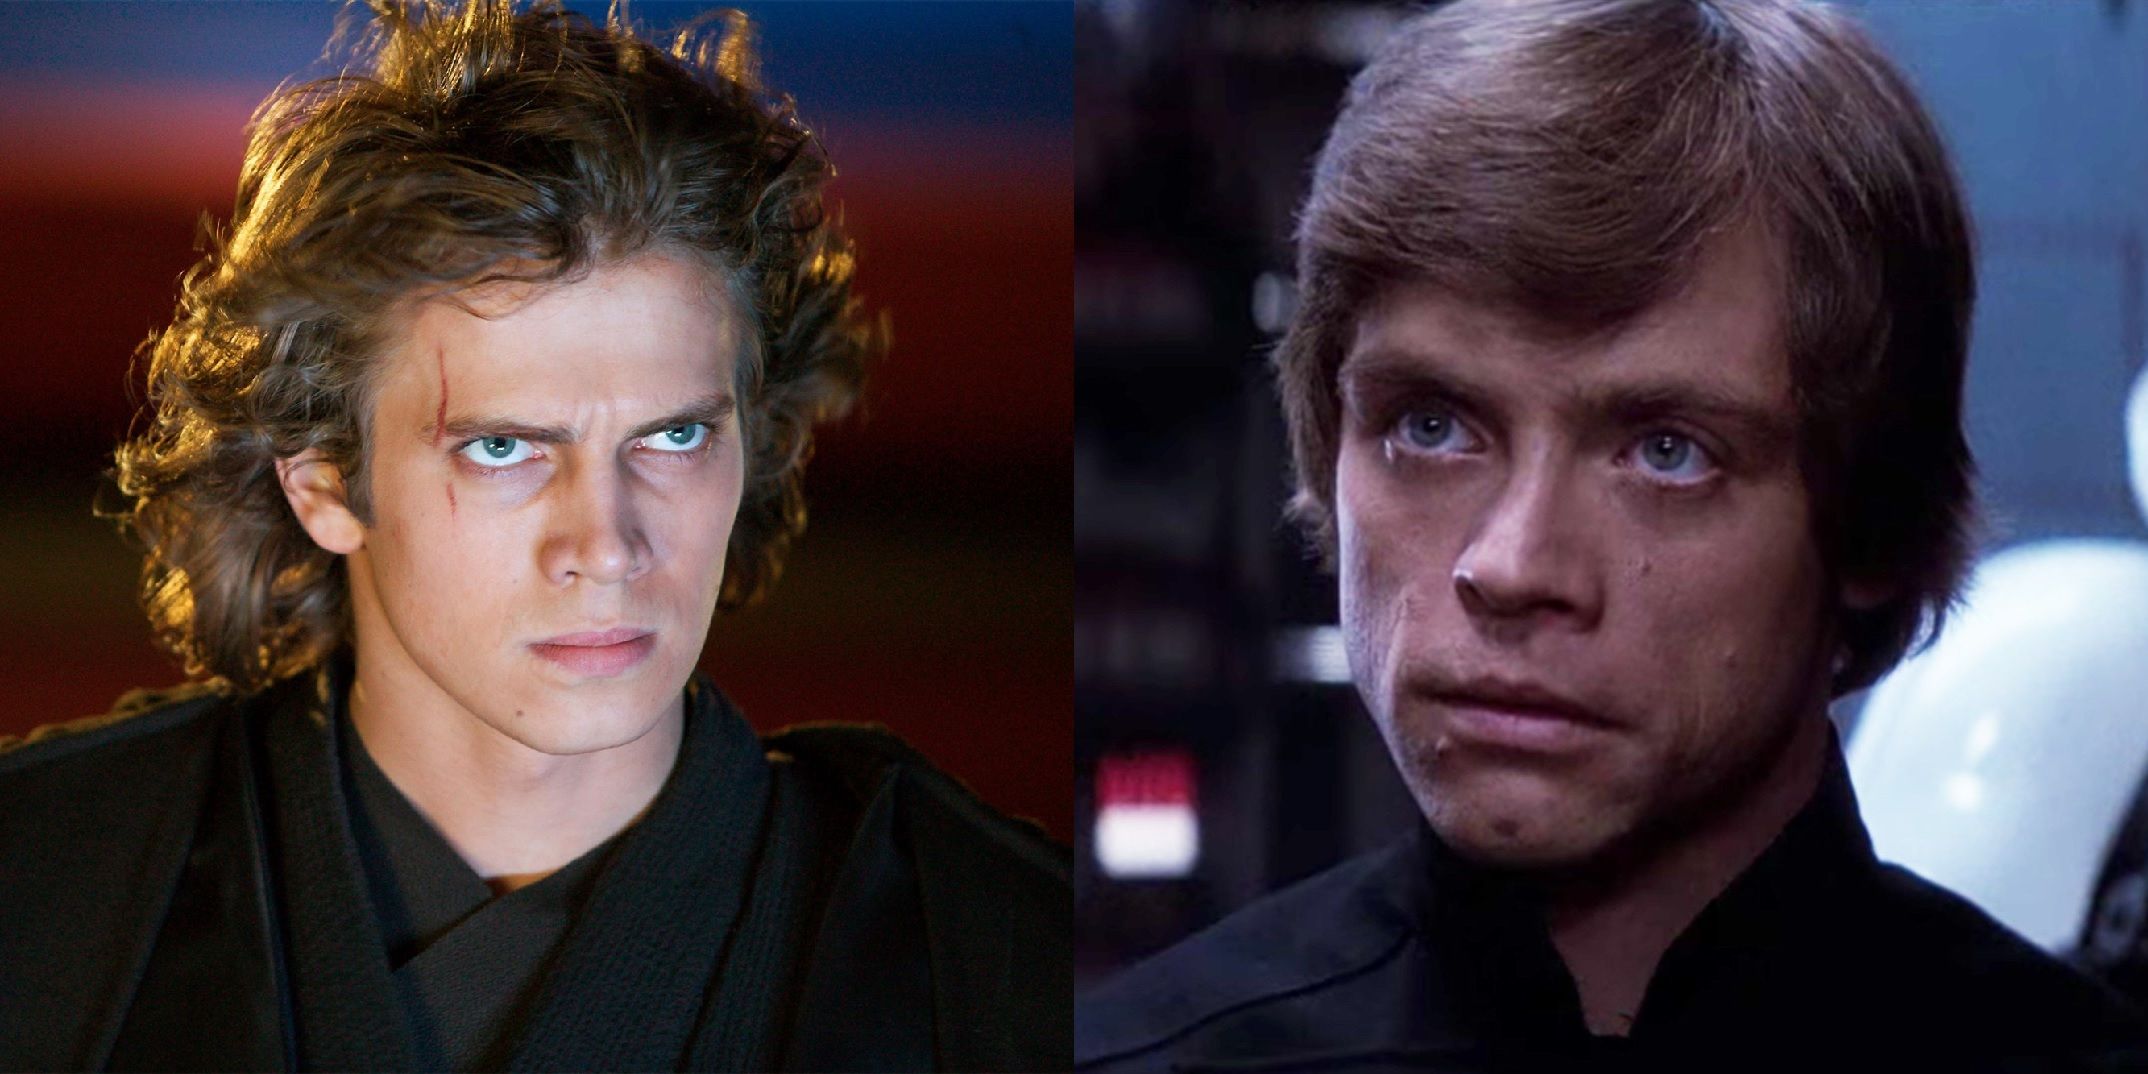 Hayden Christensen as Anakin Skywalker and Mark Hamill as Luke Skywalker in Star Wars